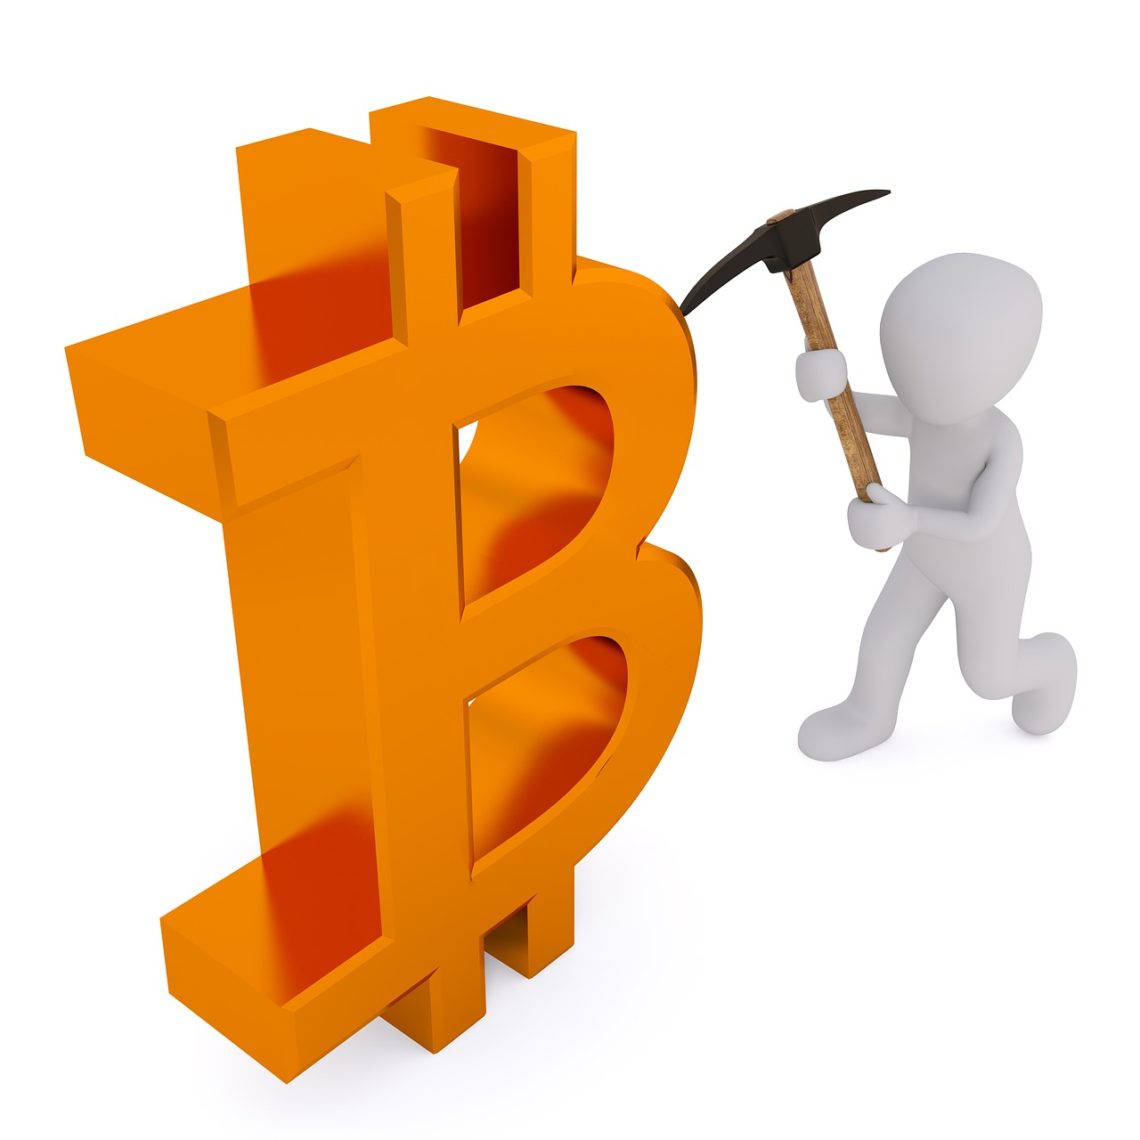 Bitcoin transaction fee increased